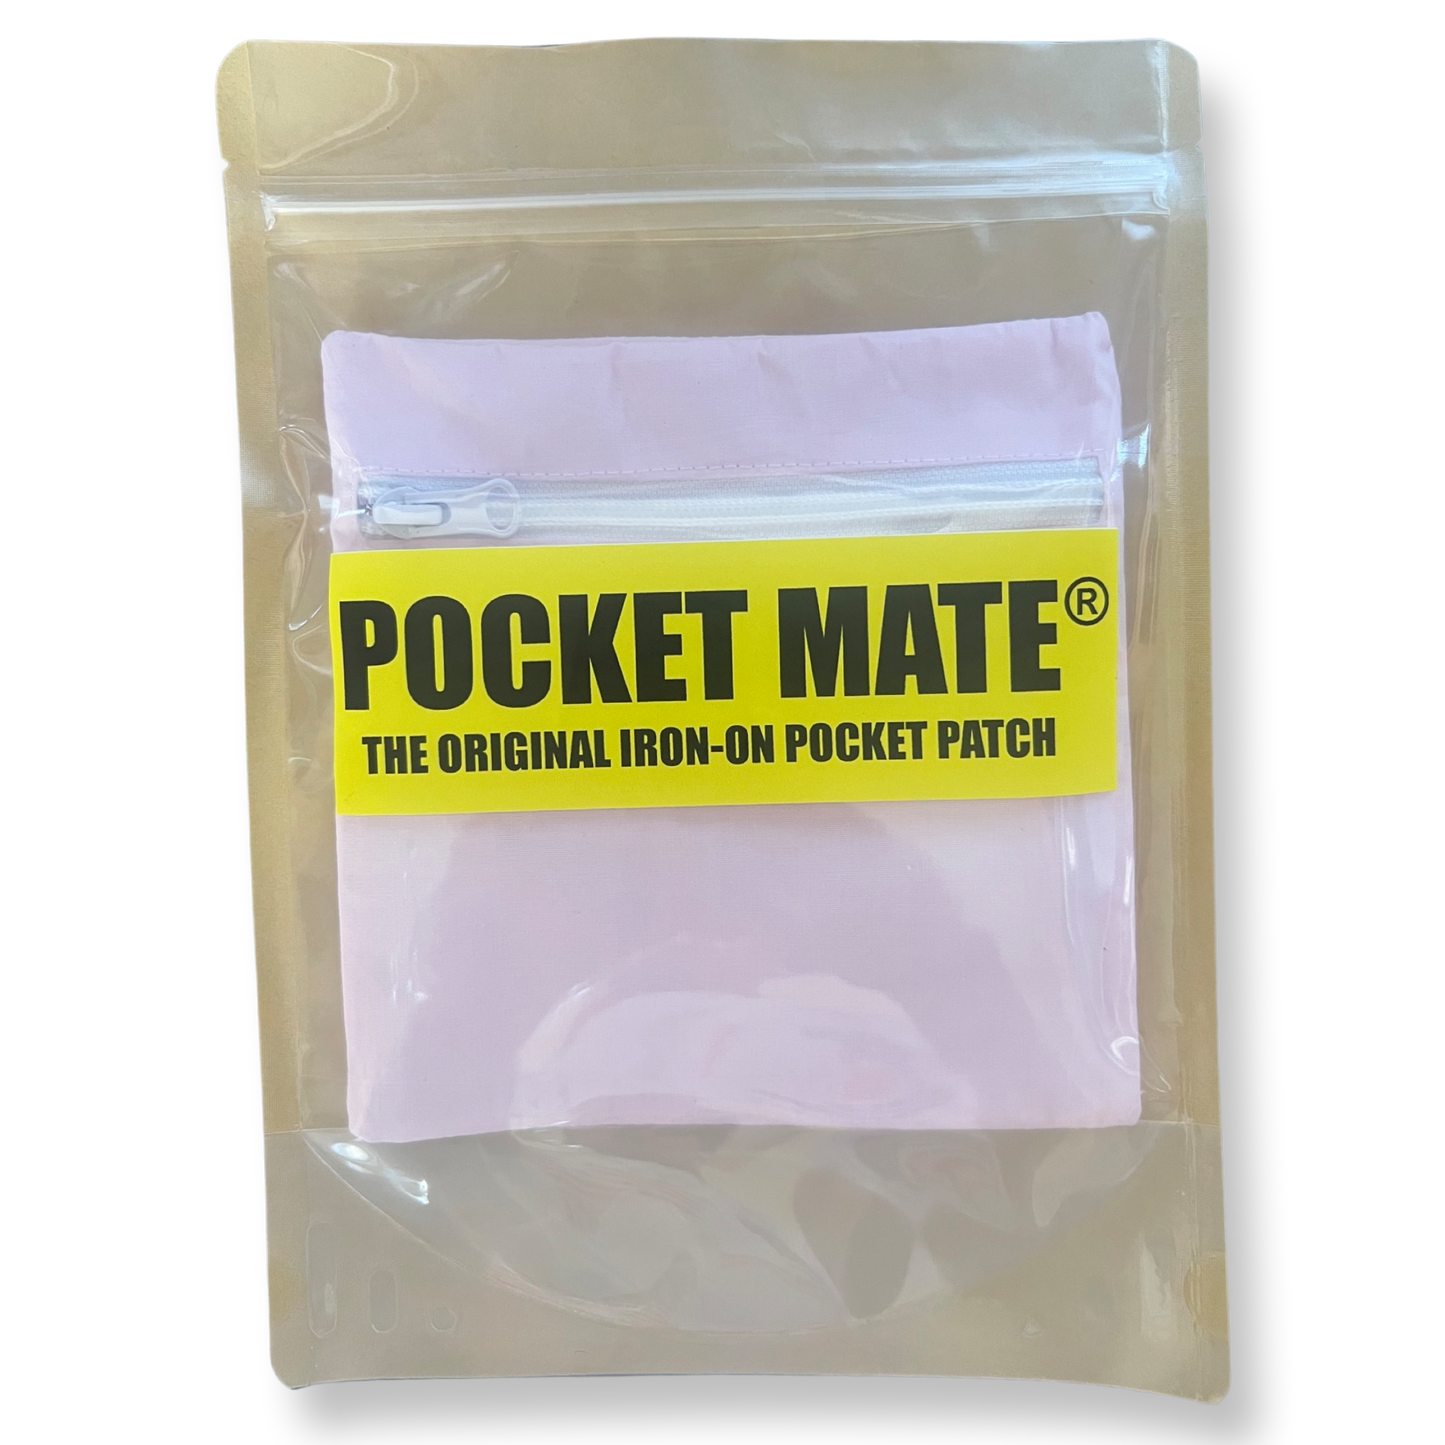 POCKET MATE® Iron-On Pocket Patch with Zip - Phone Pocket For Travel - Zipped Secret Pocket - Stash Credit Cards or Passport - Pink